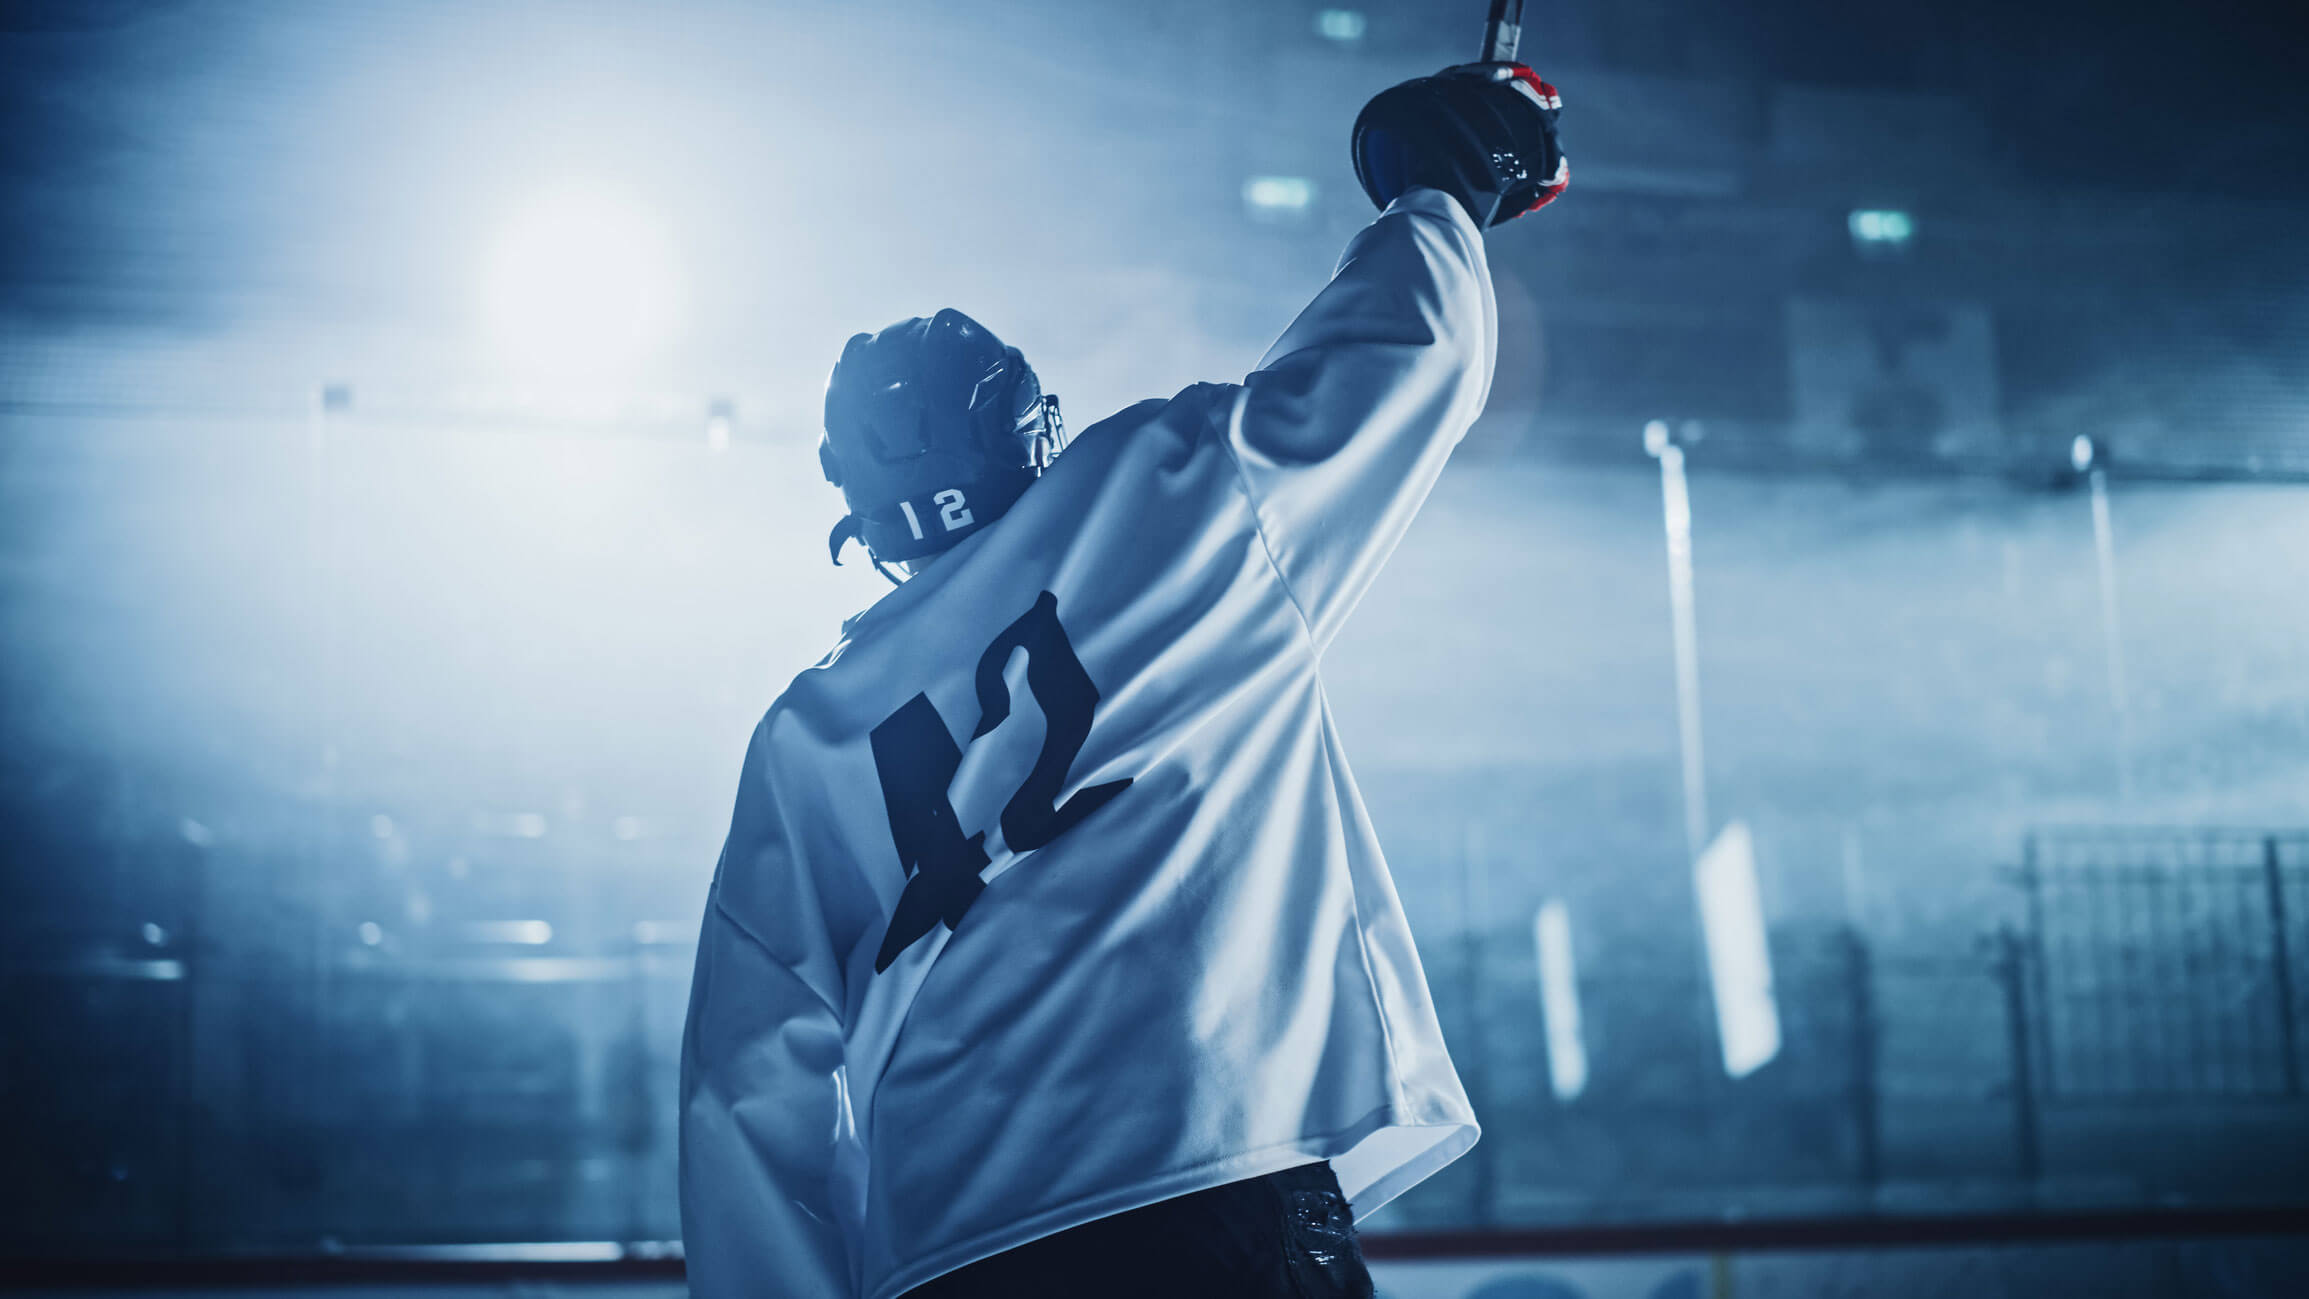 hockey player with raised arm